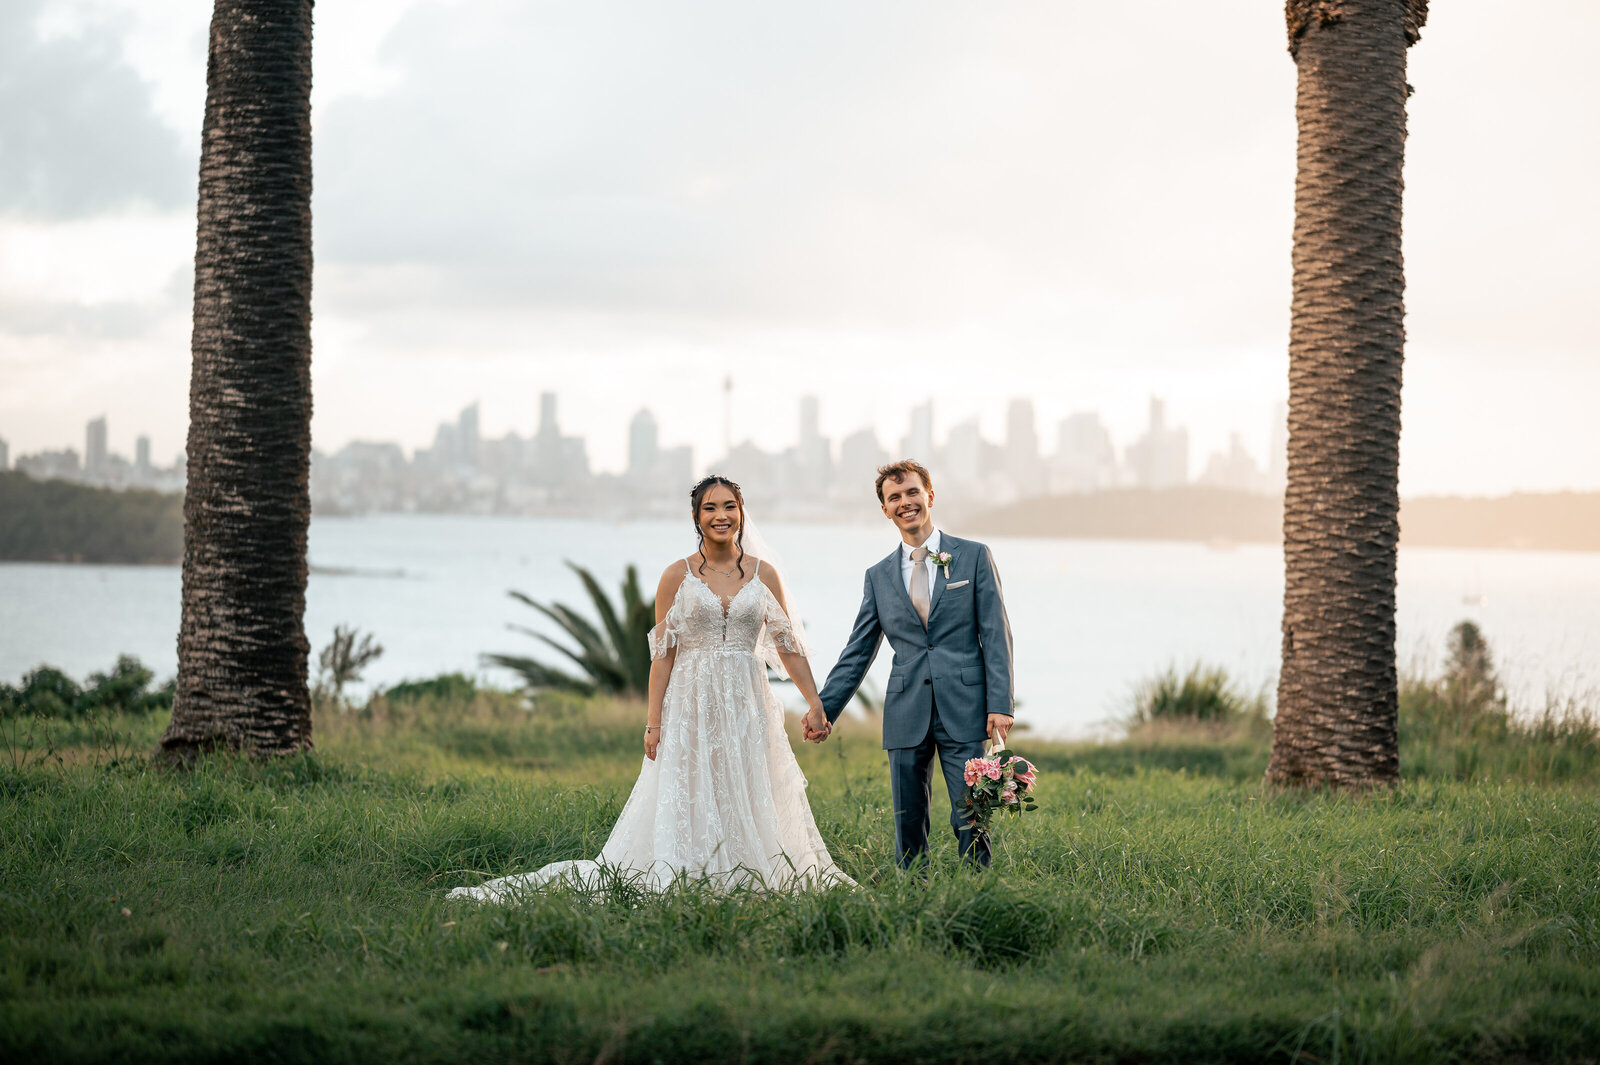 Photography by Sydneys best Wedding Photographer